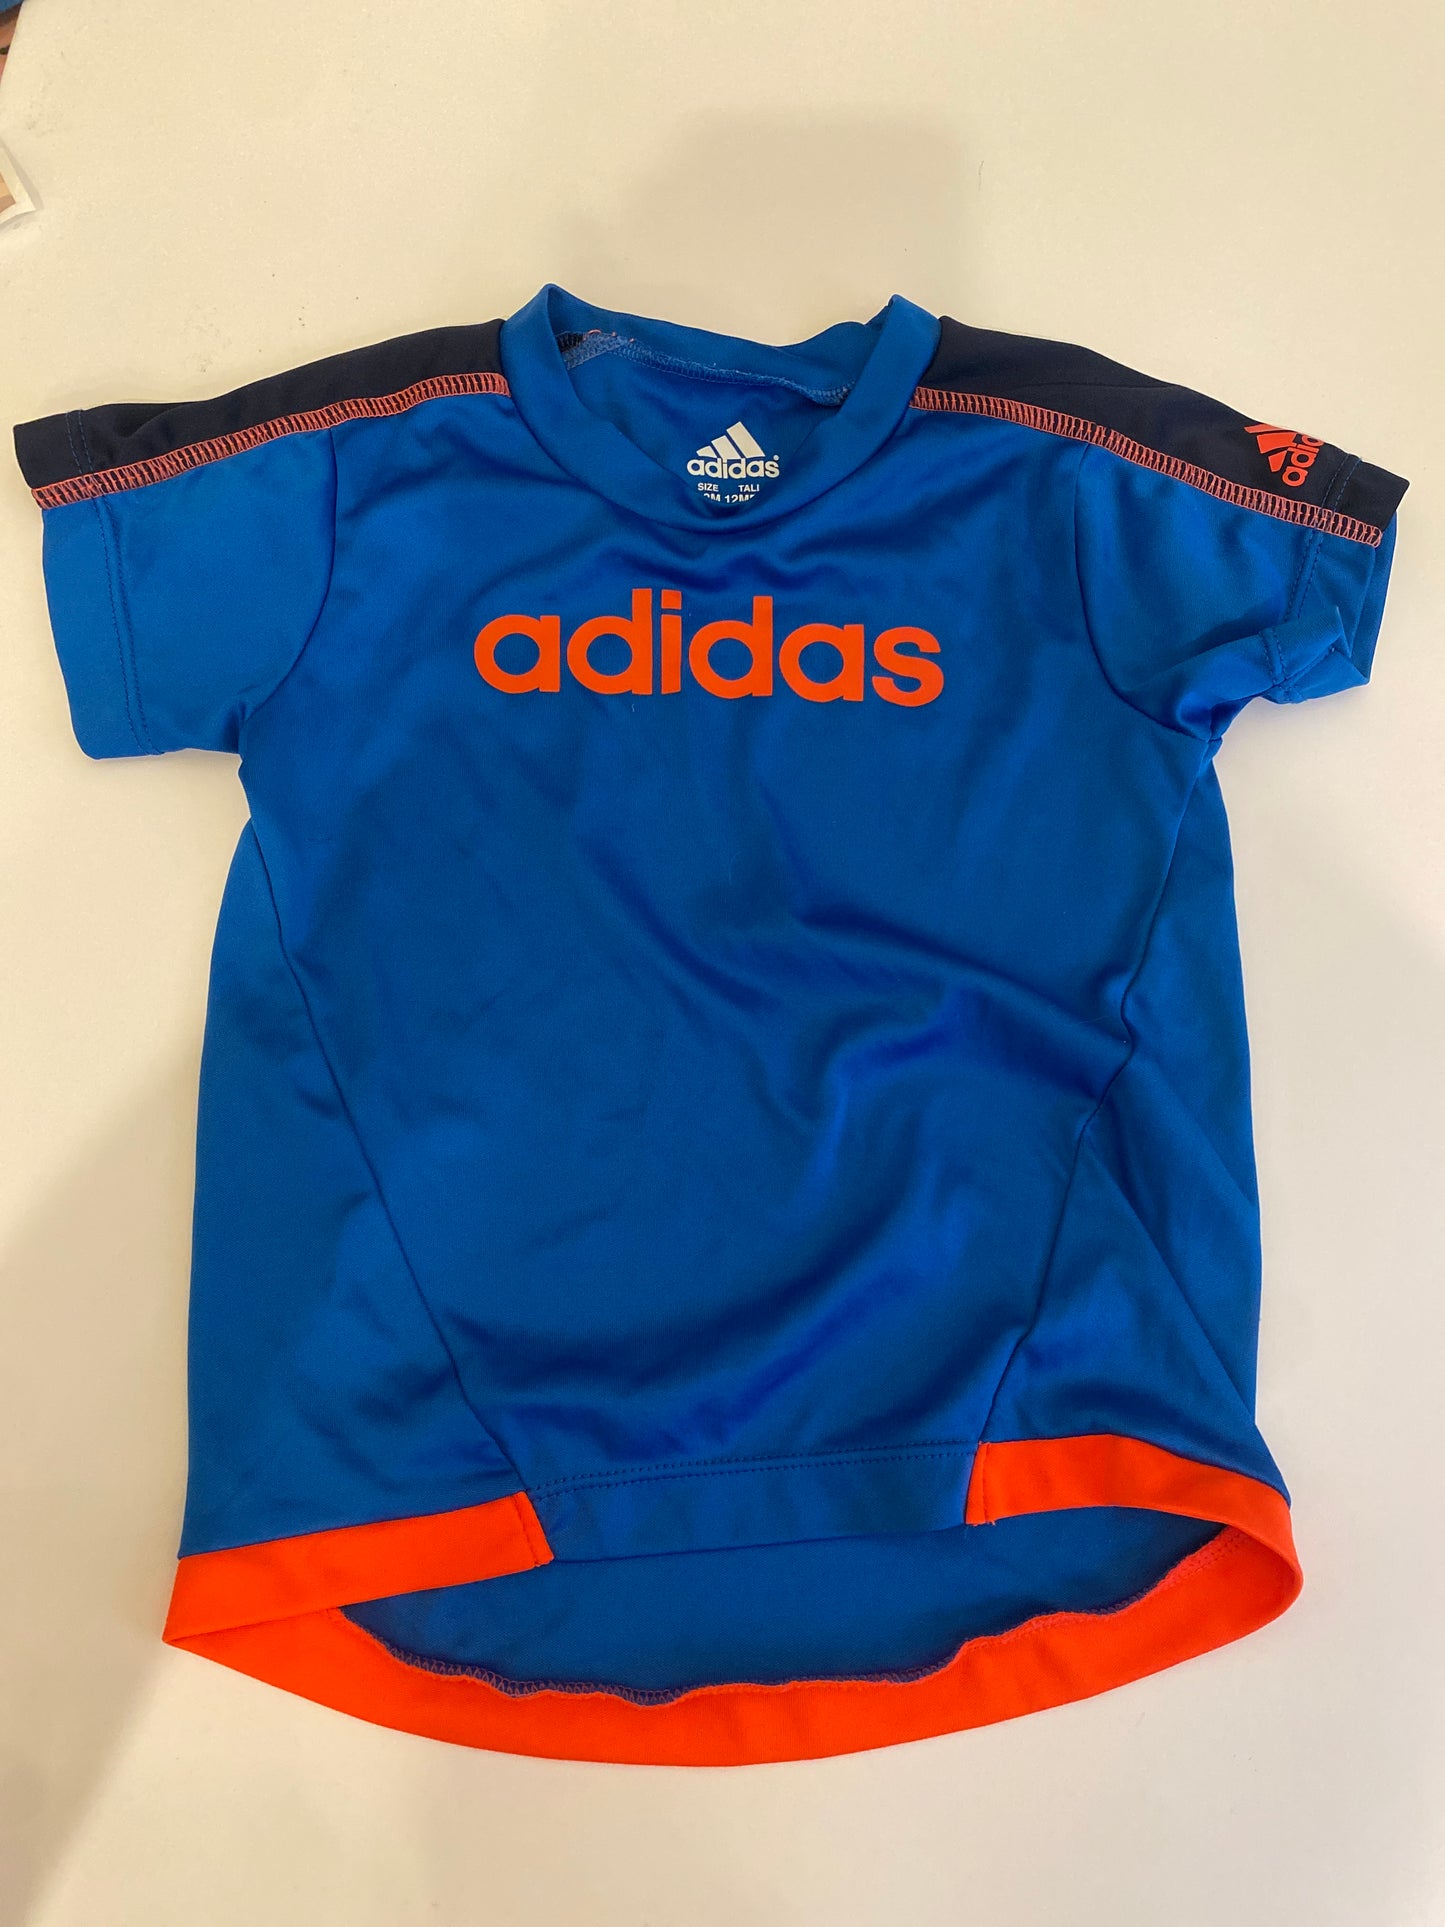 Boys 12 mo adidas short. Blue and orange perfect for FCC